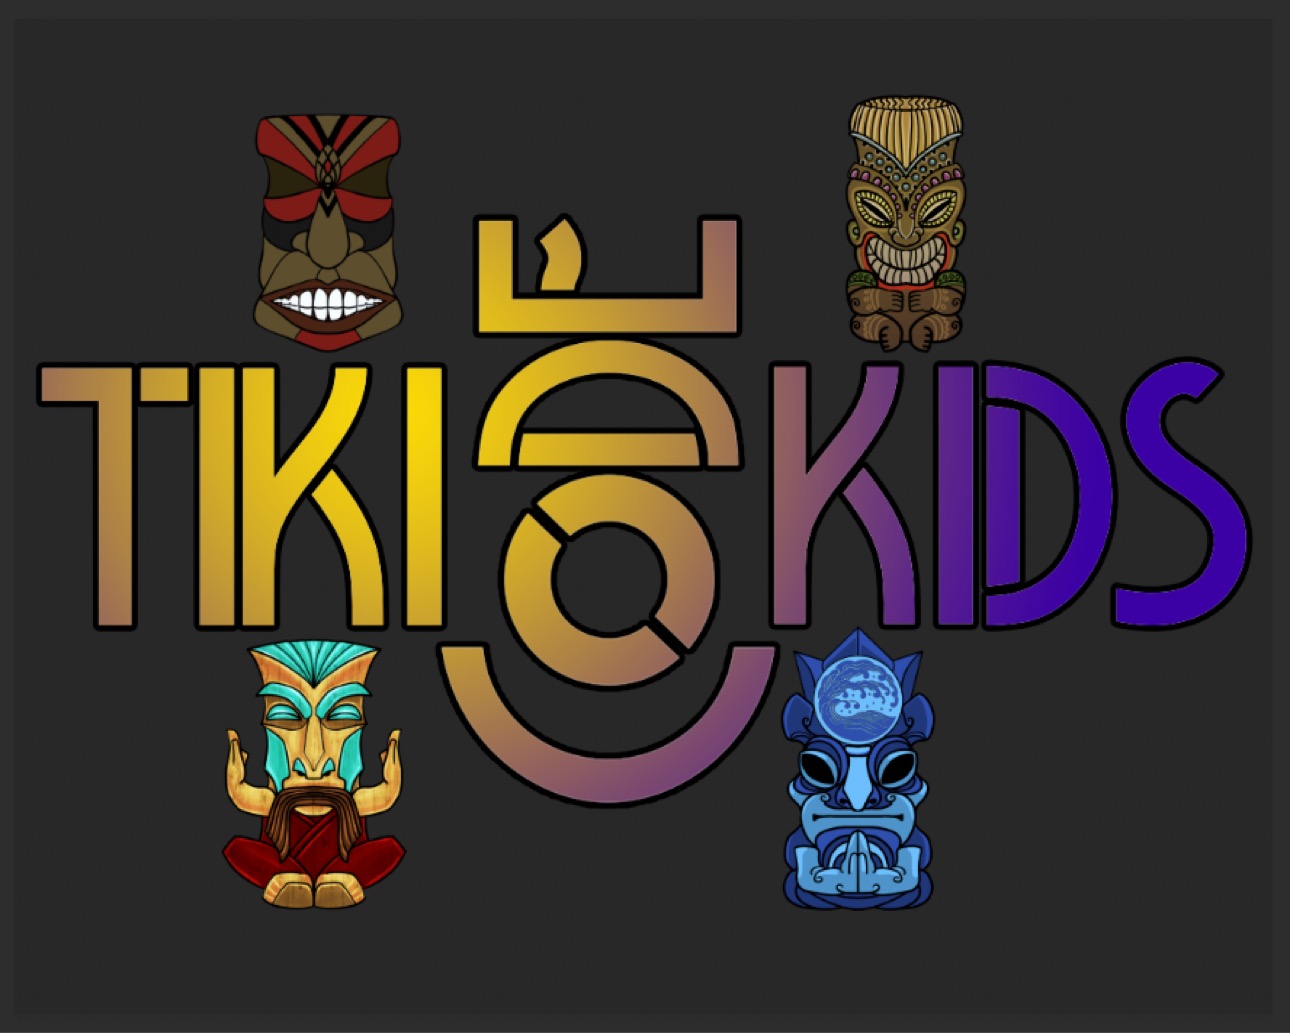 Tiki Kids logo with some designs